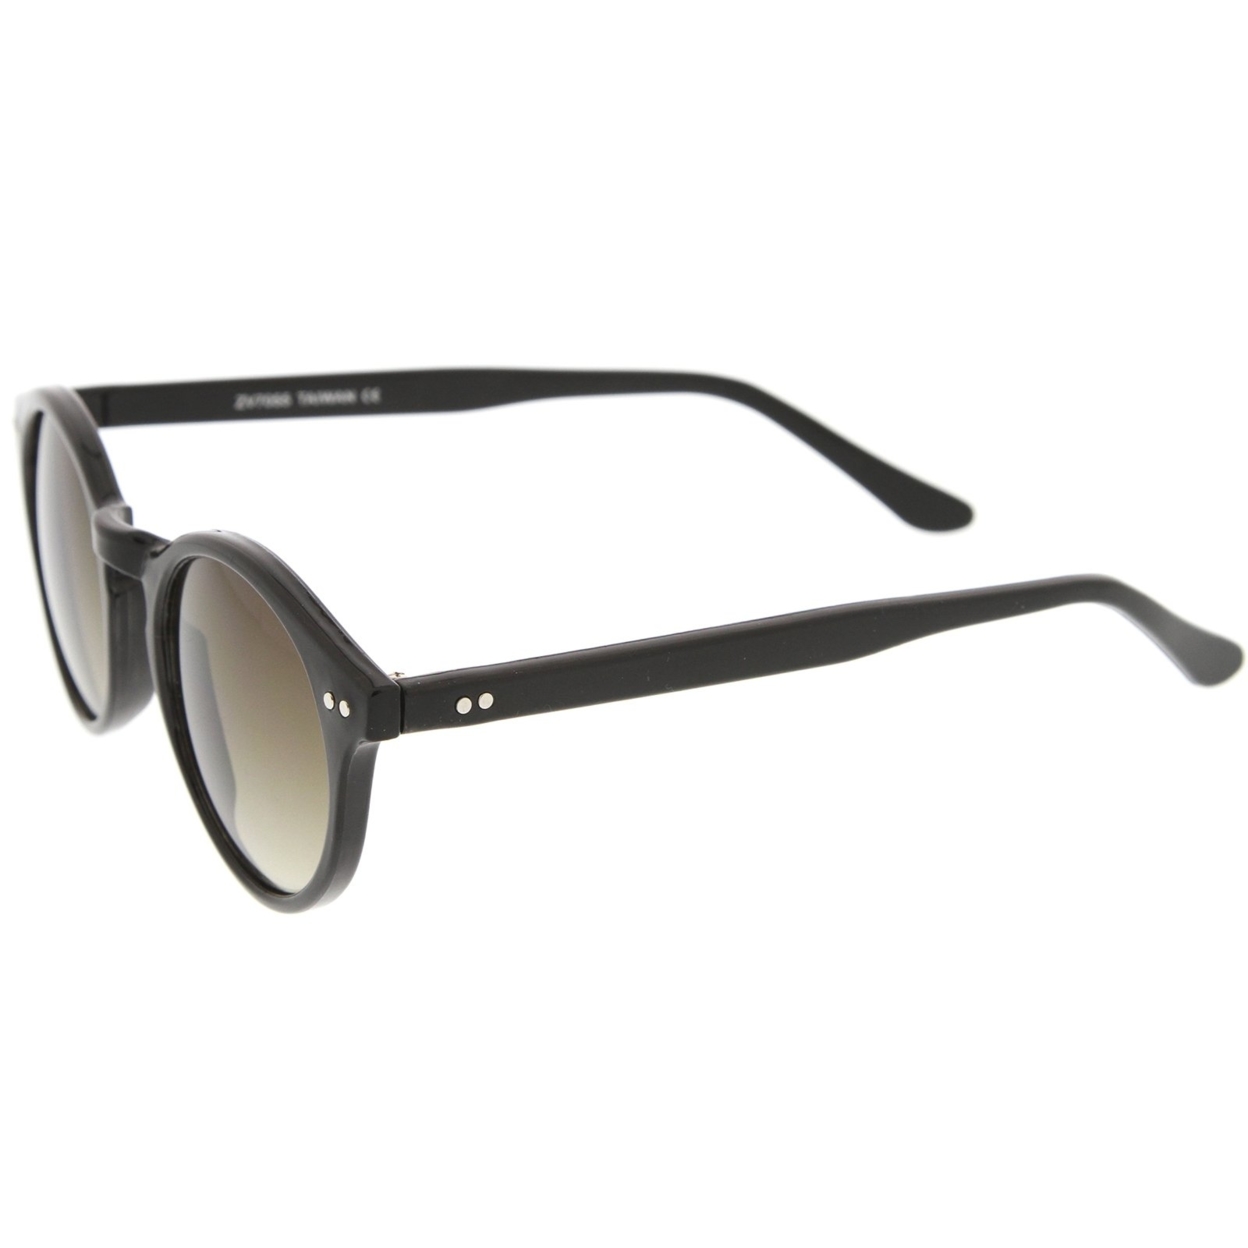 Classic Horn Rimmed Keyhole Nose Bridge P3 Round Sunglasses 46mm - Shiny Black / Smoke Gradient